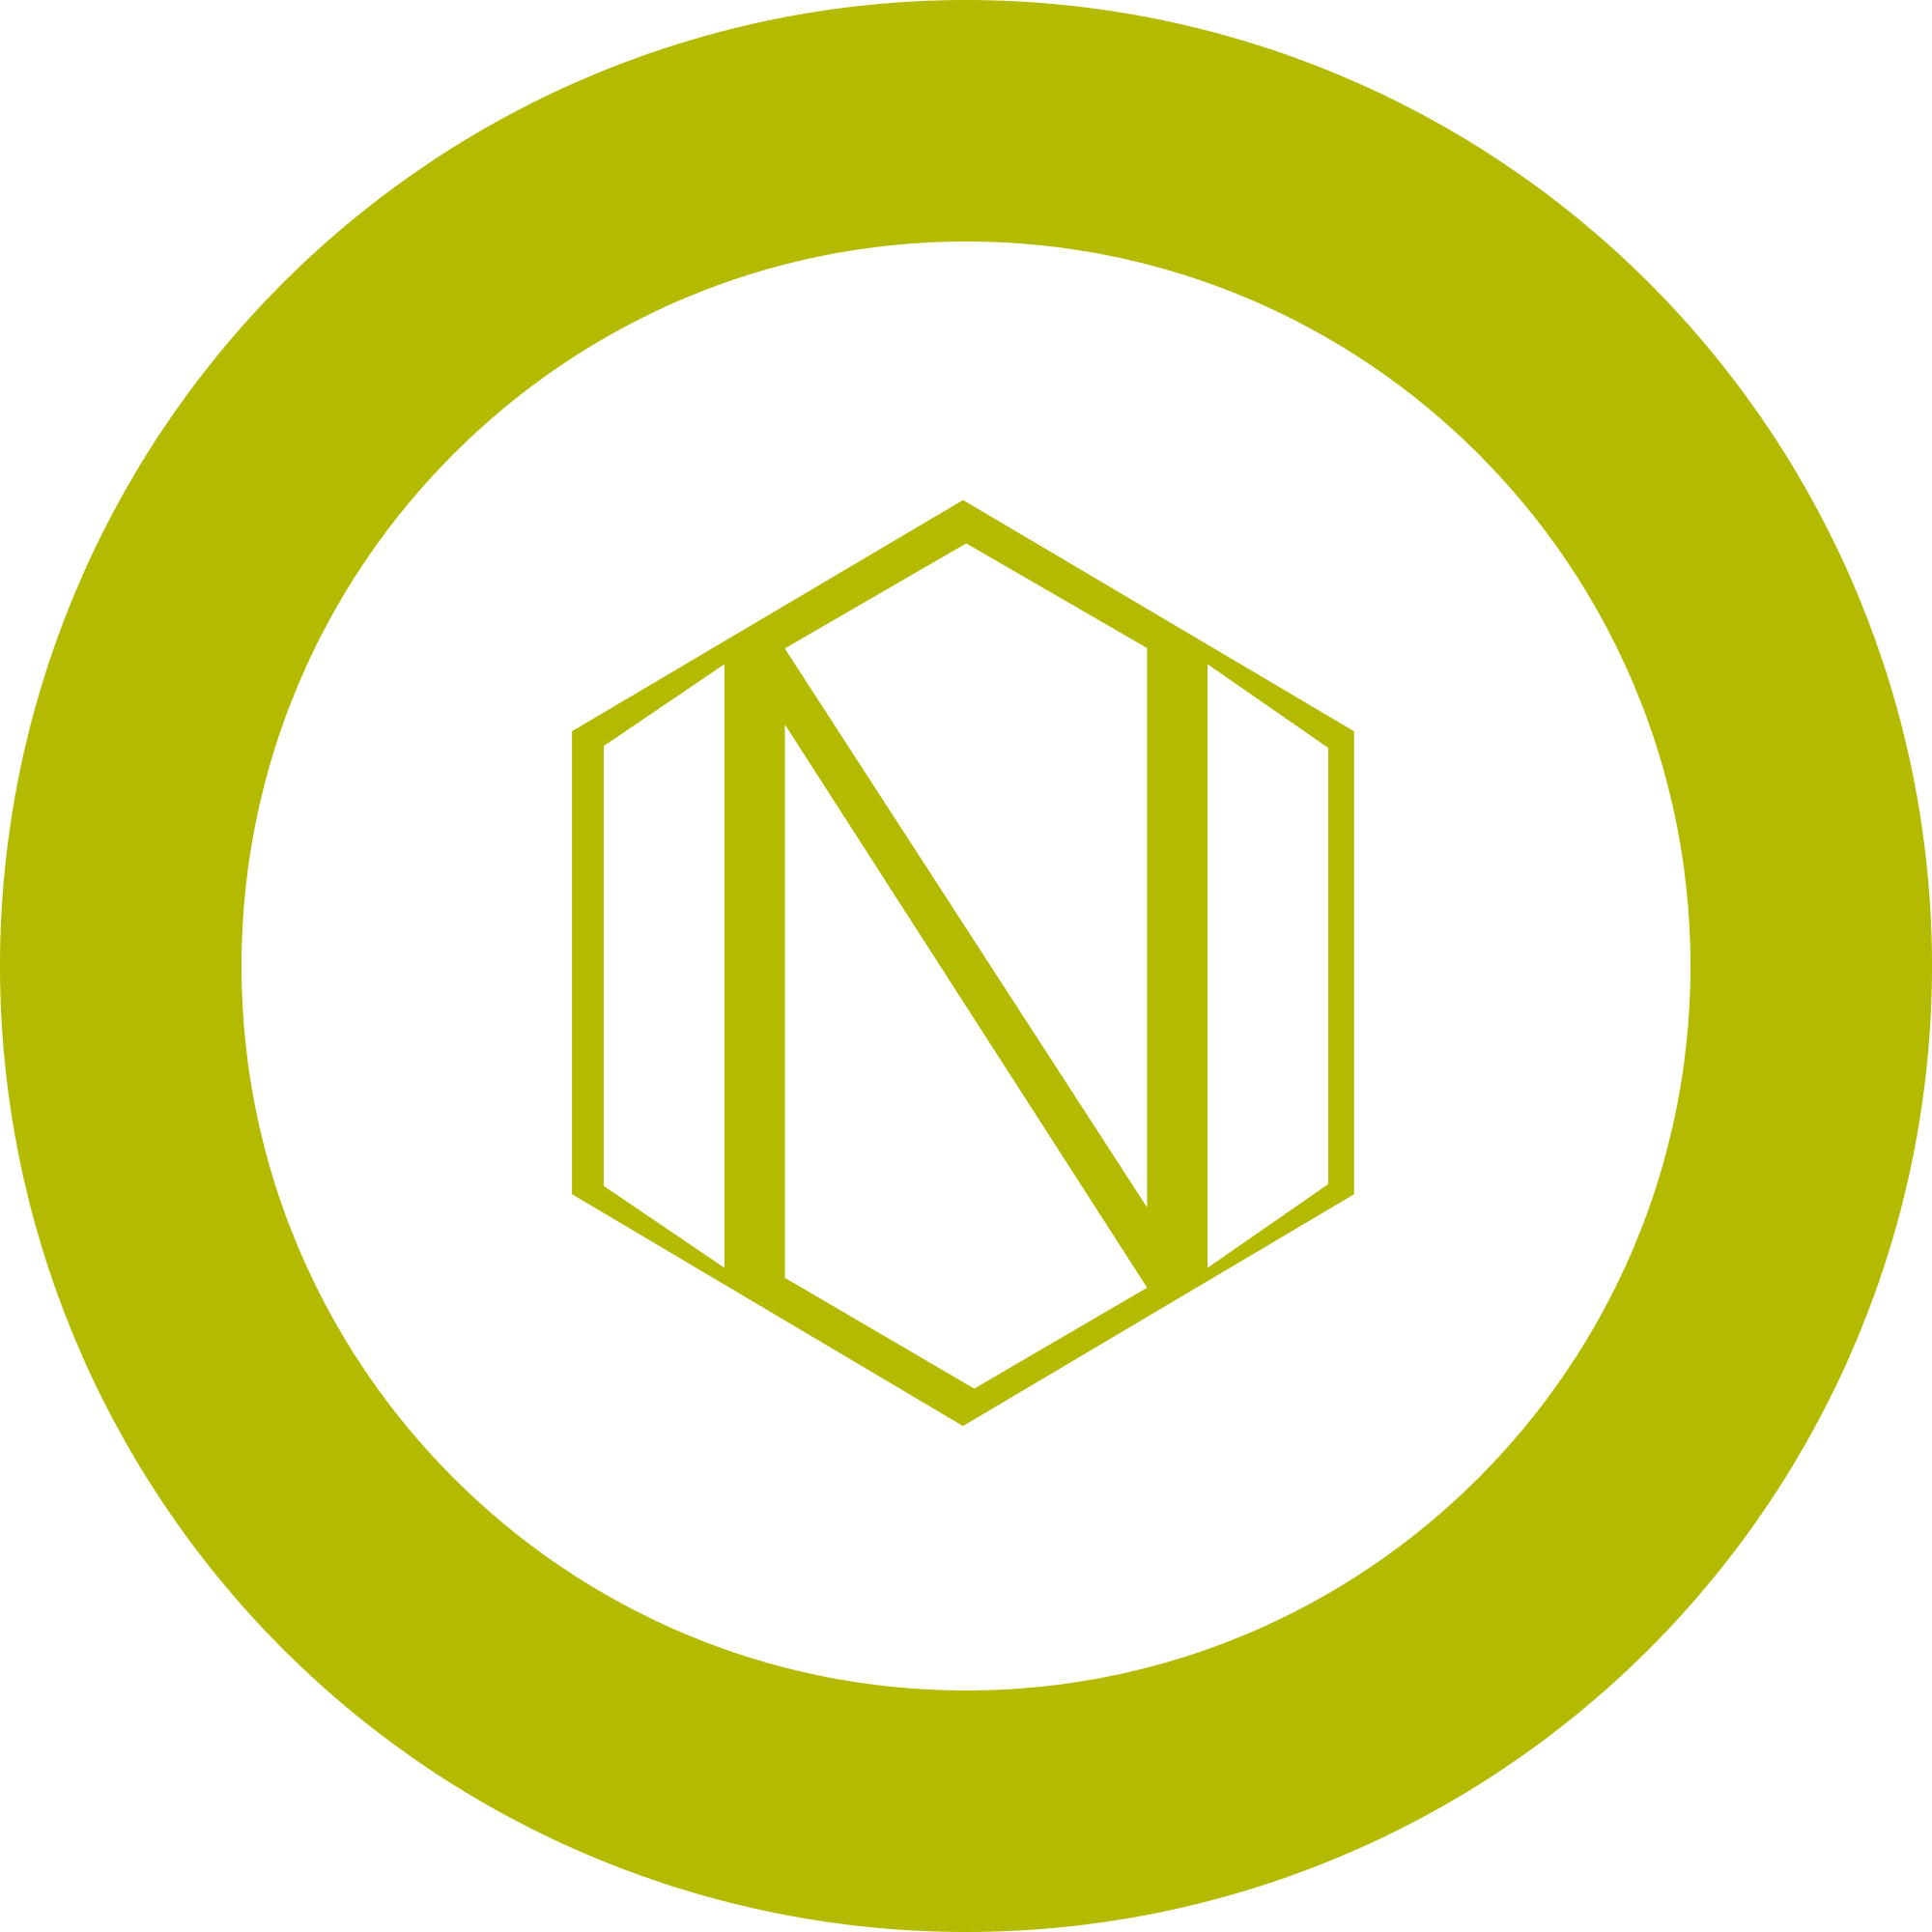 Neumark logo in png format